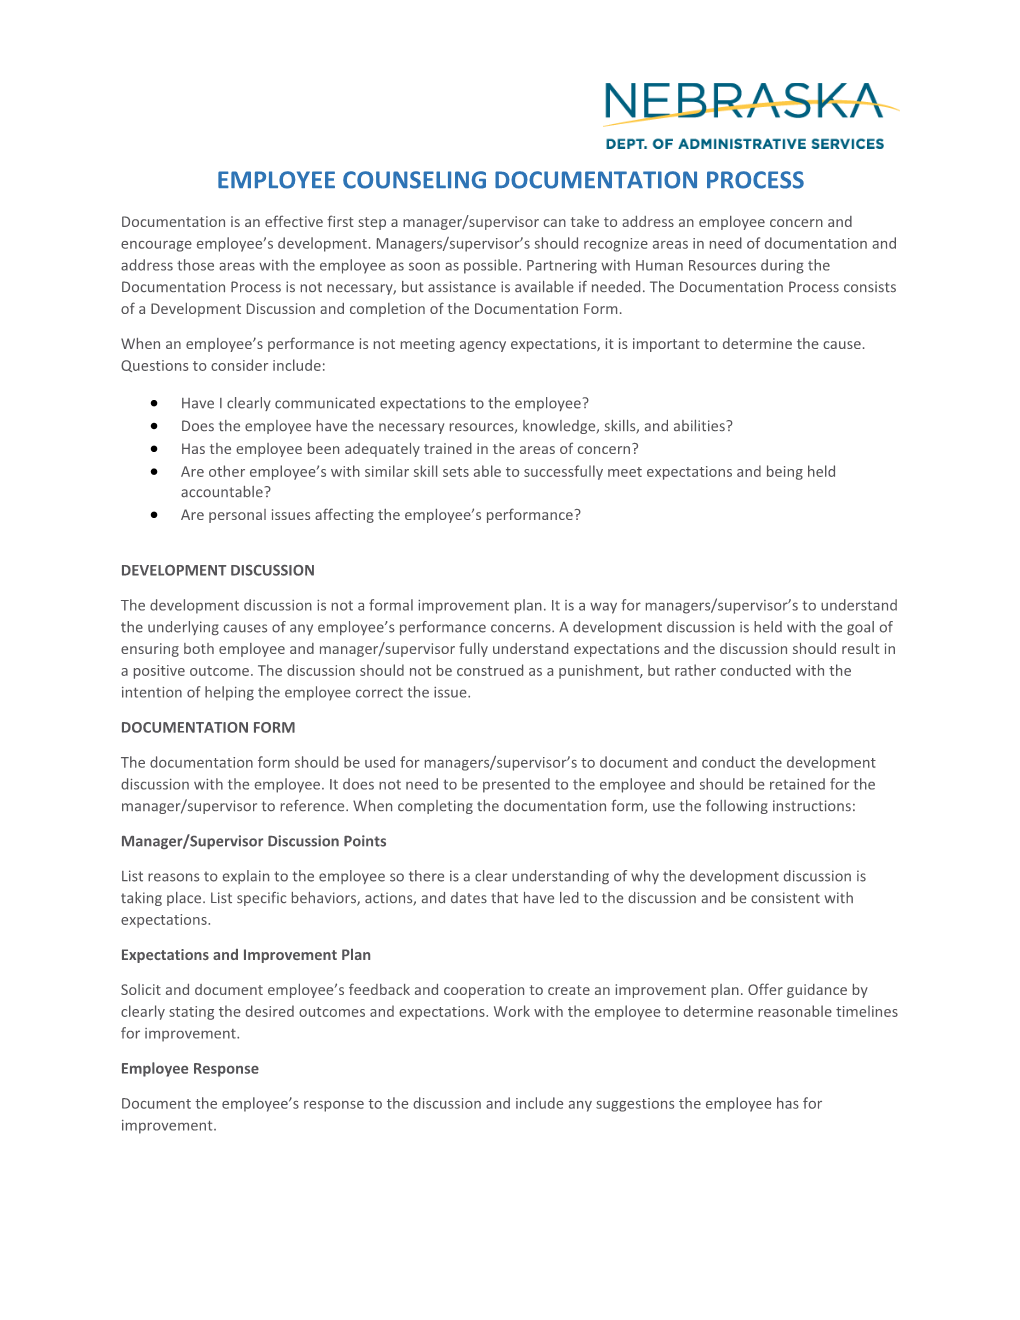 Employee Counseling Documentation Process